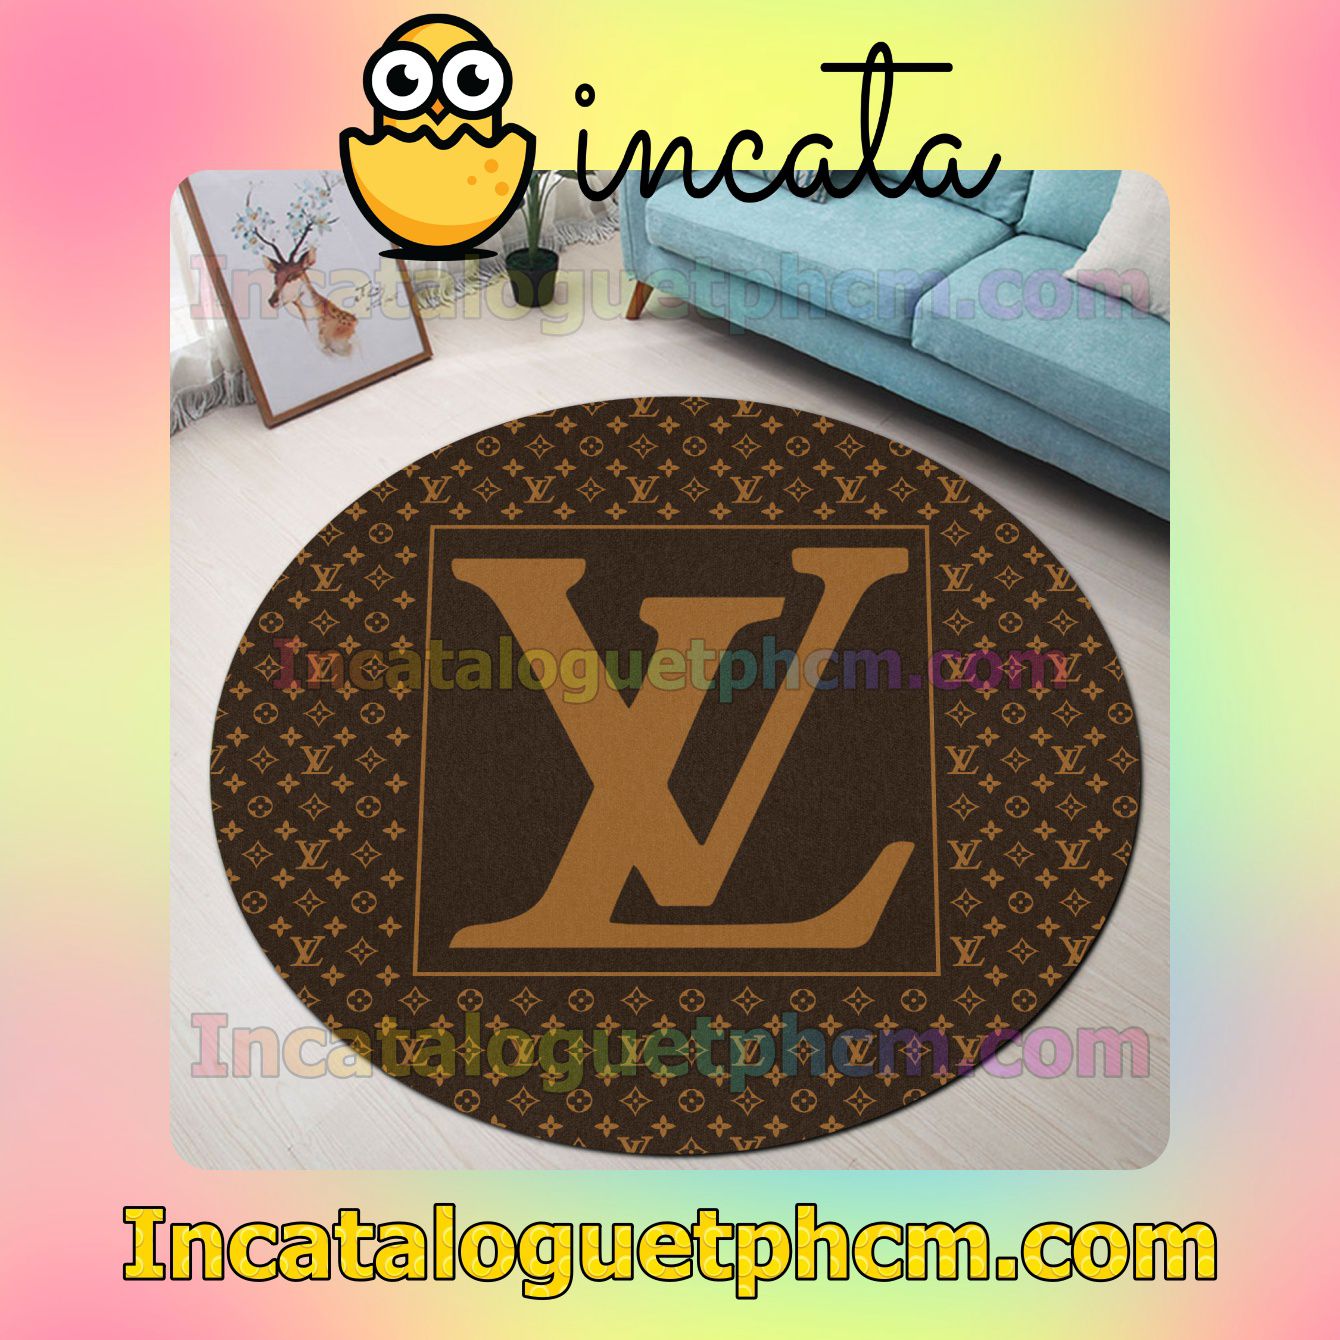 Louis Vuitton Dark Brown Monogram With Big Logo In Square Center Round Carpet Rugs For Kitchen